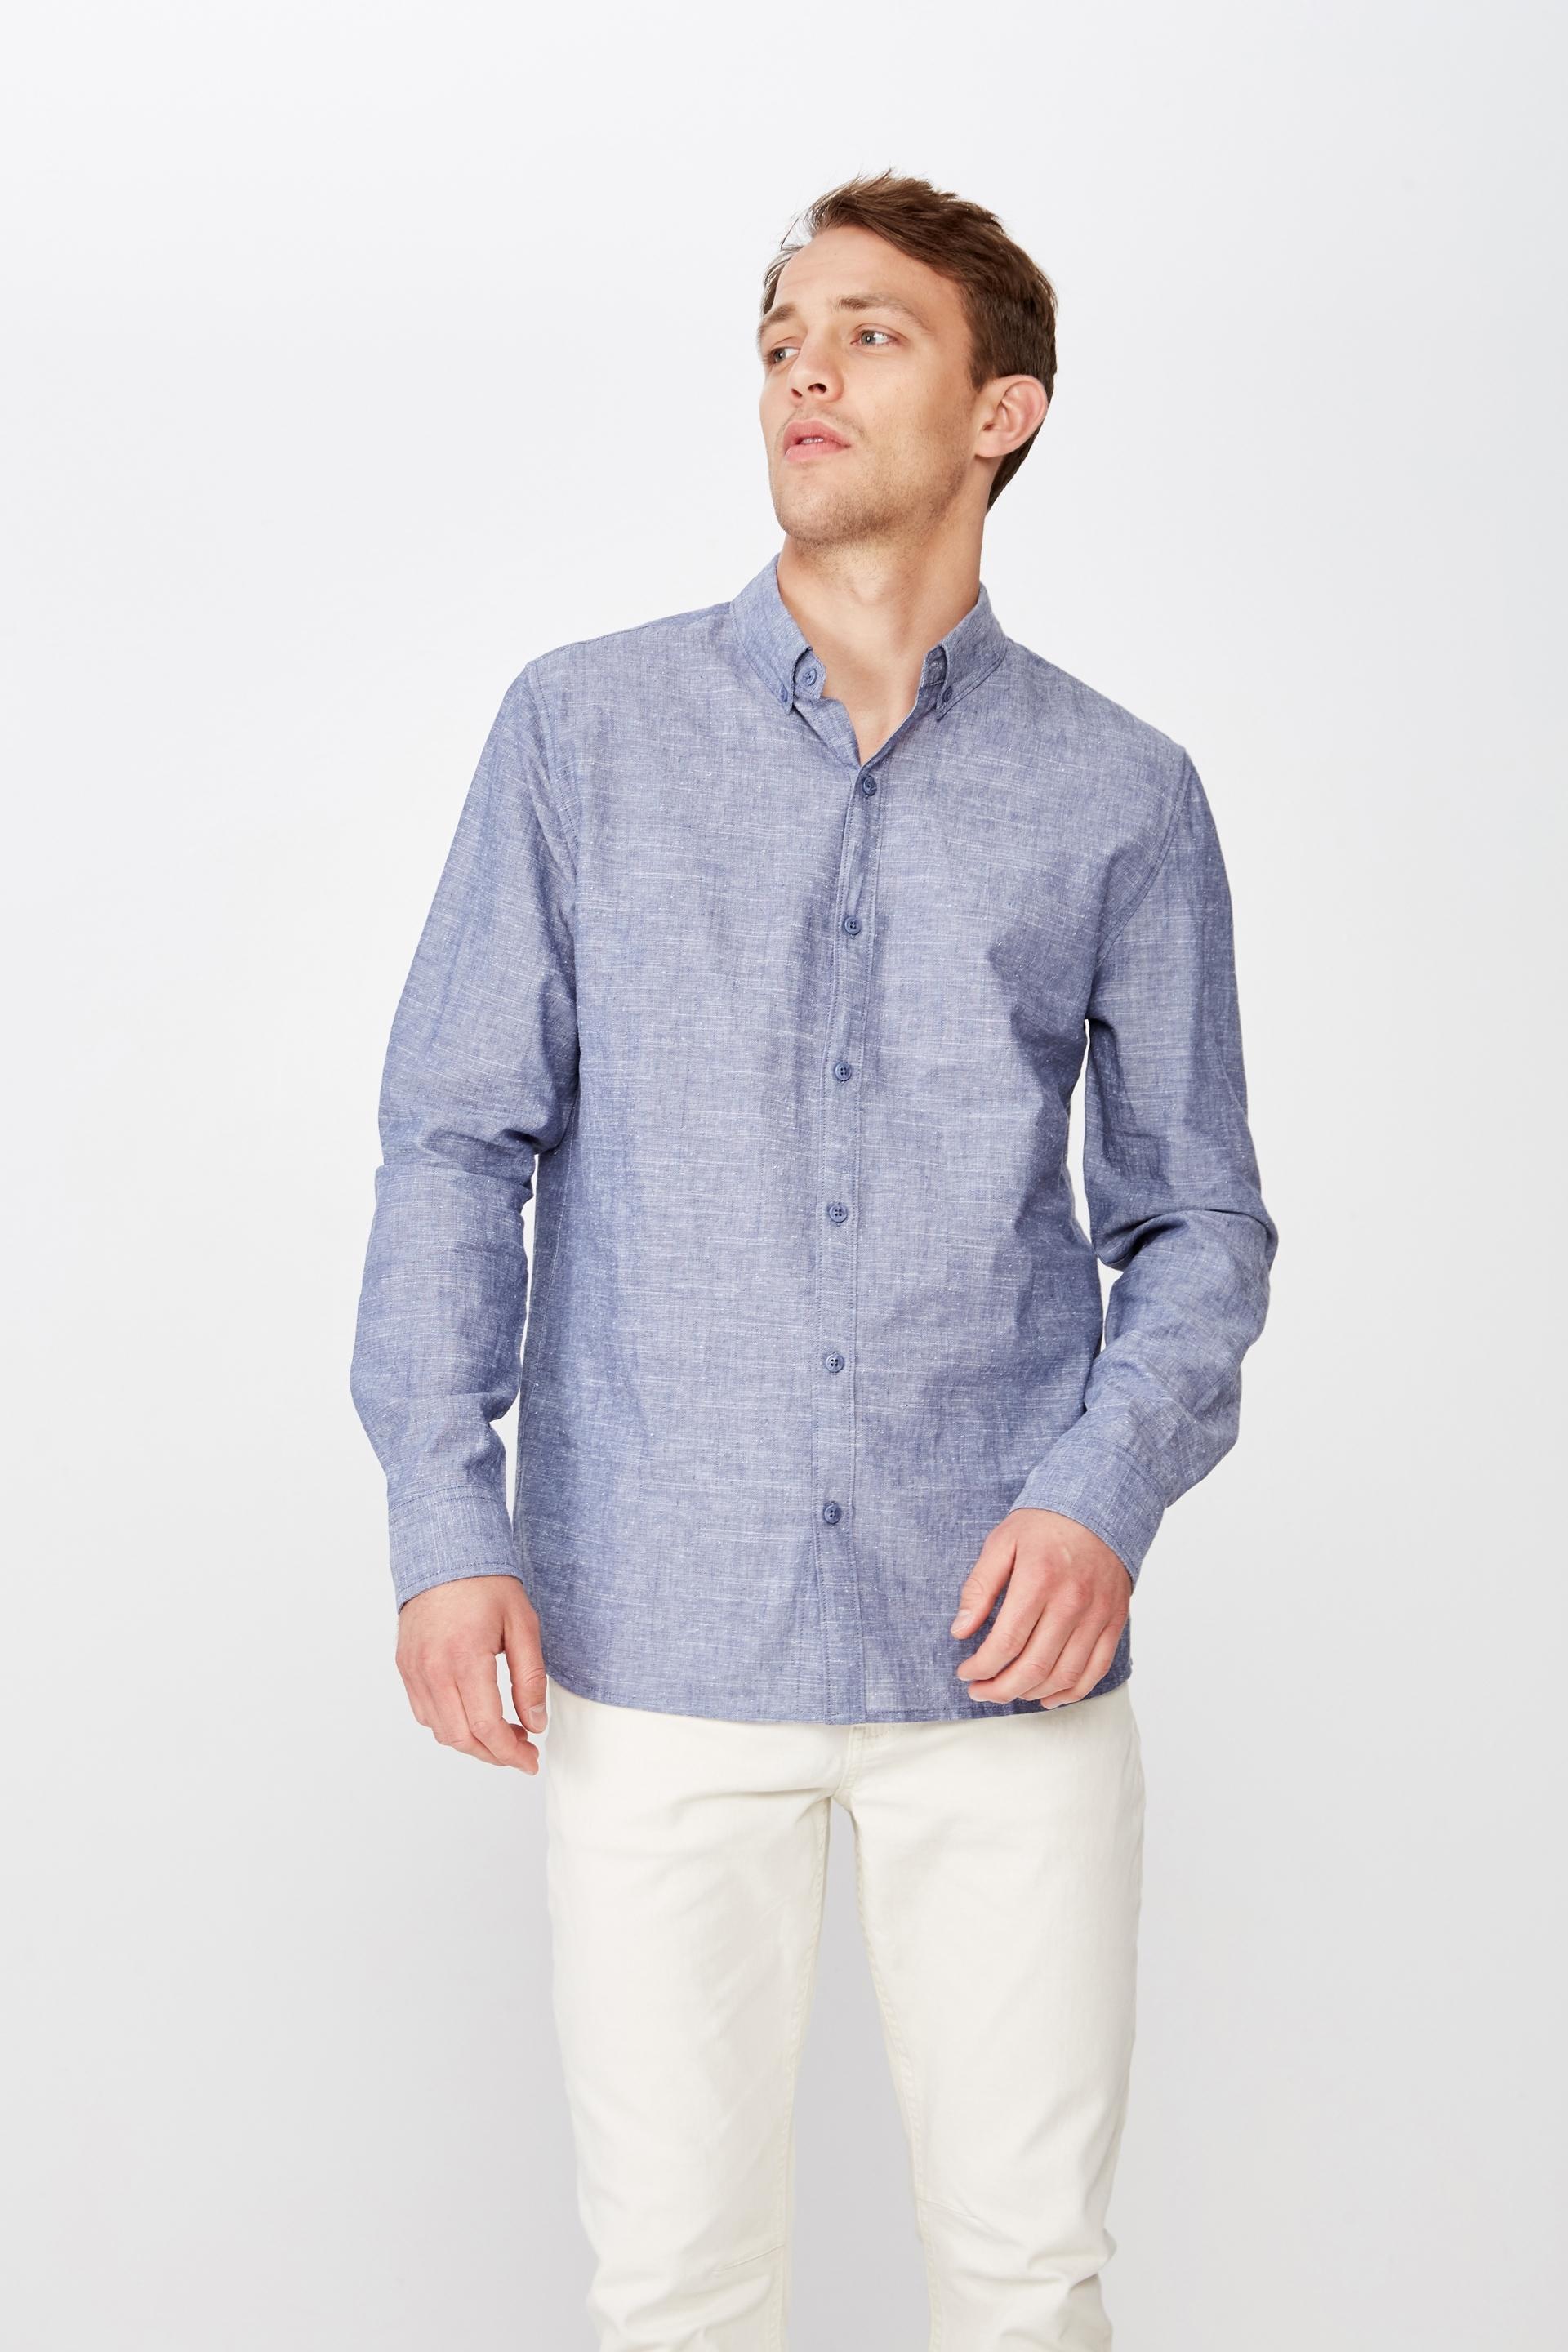 Premium linen/cotton long sleeve shirt - blue/white Cotton On Shirts ...